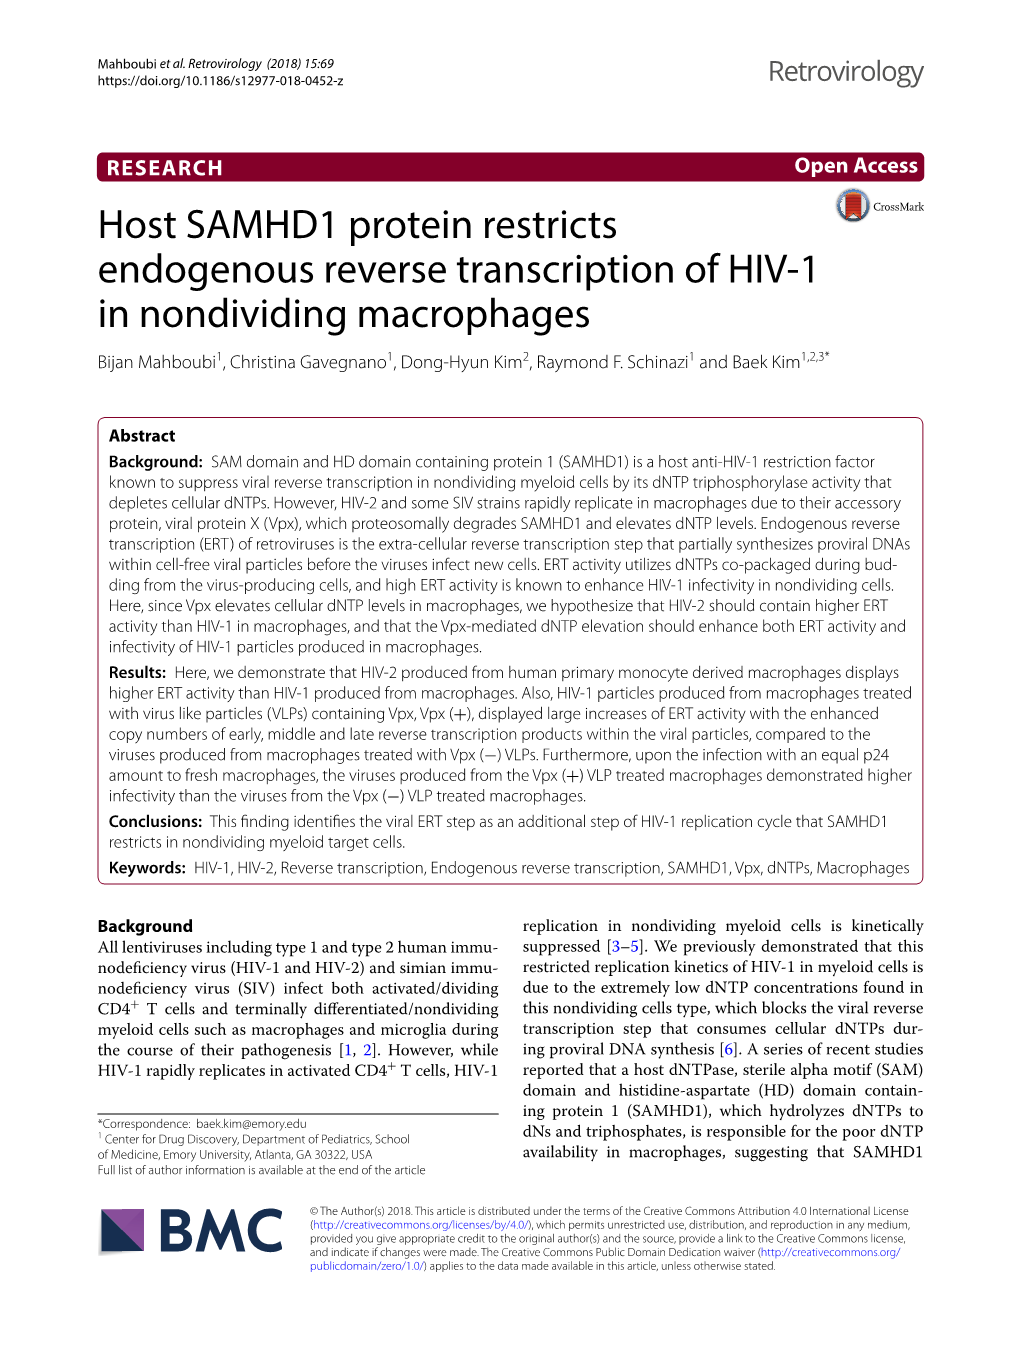 Host SAMHD1 Protein Restricts Endogenous Reverse Transcription of HIV‑1 in Nondividing Macrophages Bijan Mahboubi1, Christina Gavegnano1, Dong‑Hyun Kim2, Raymond F